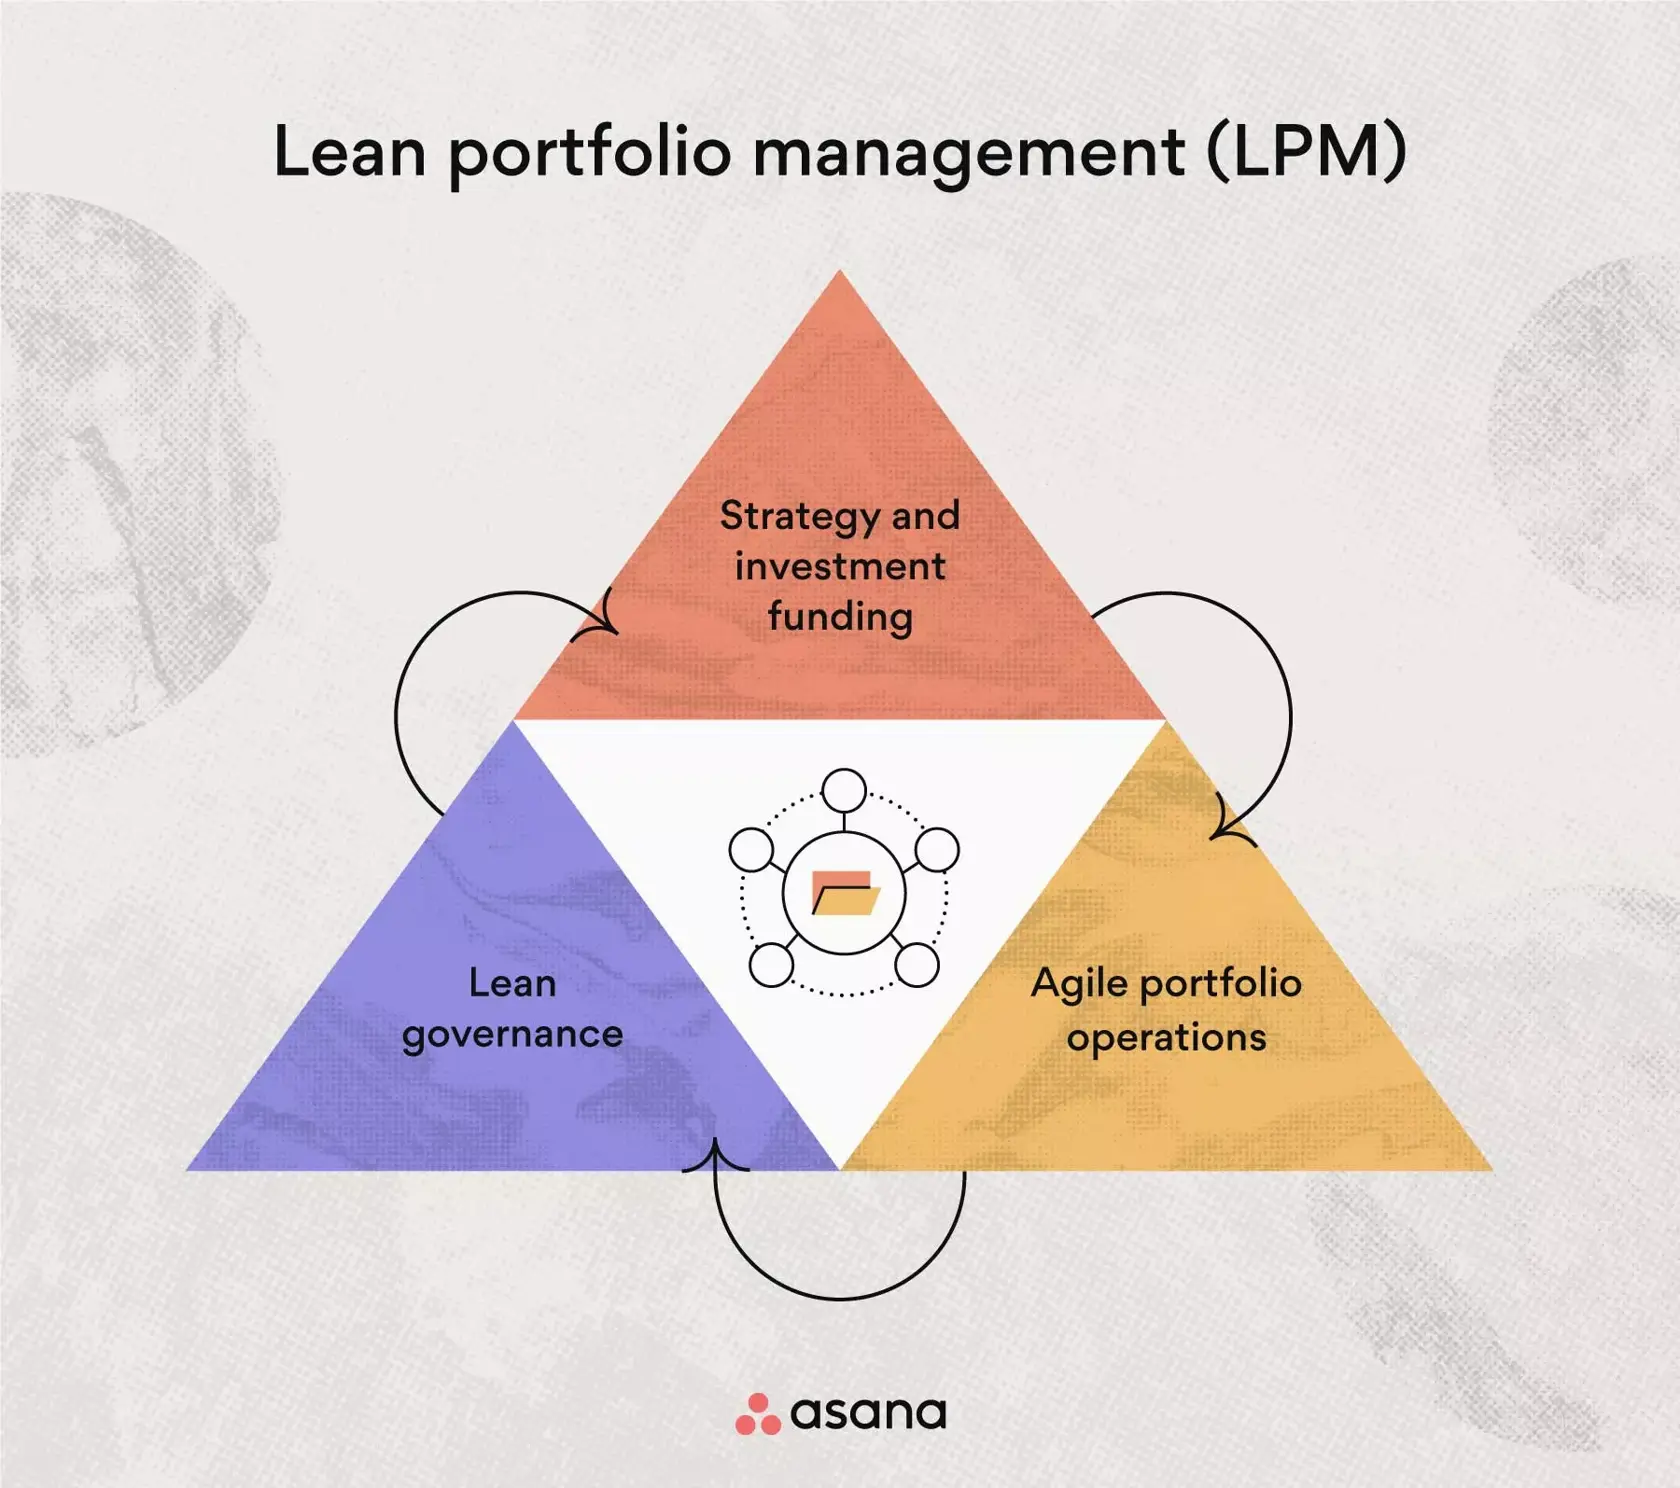 What is lean portfolio management (LPM)?